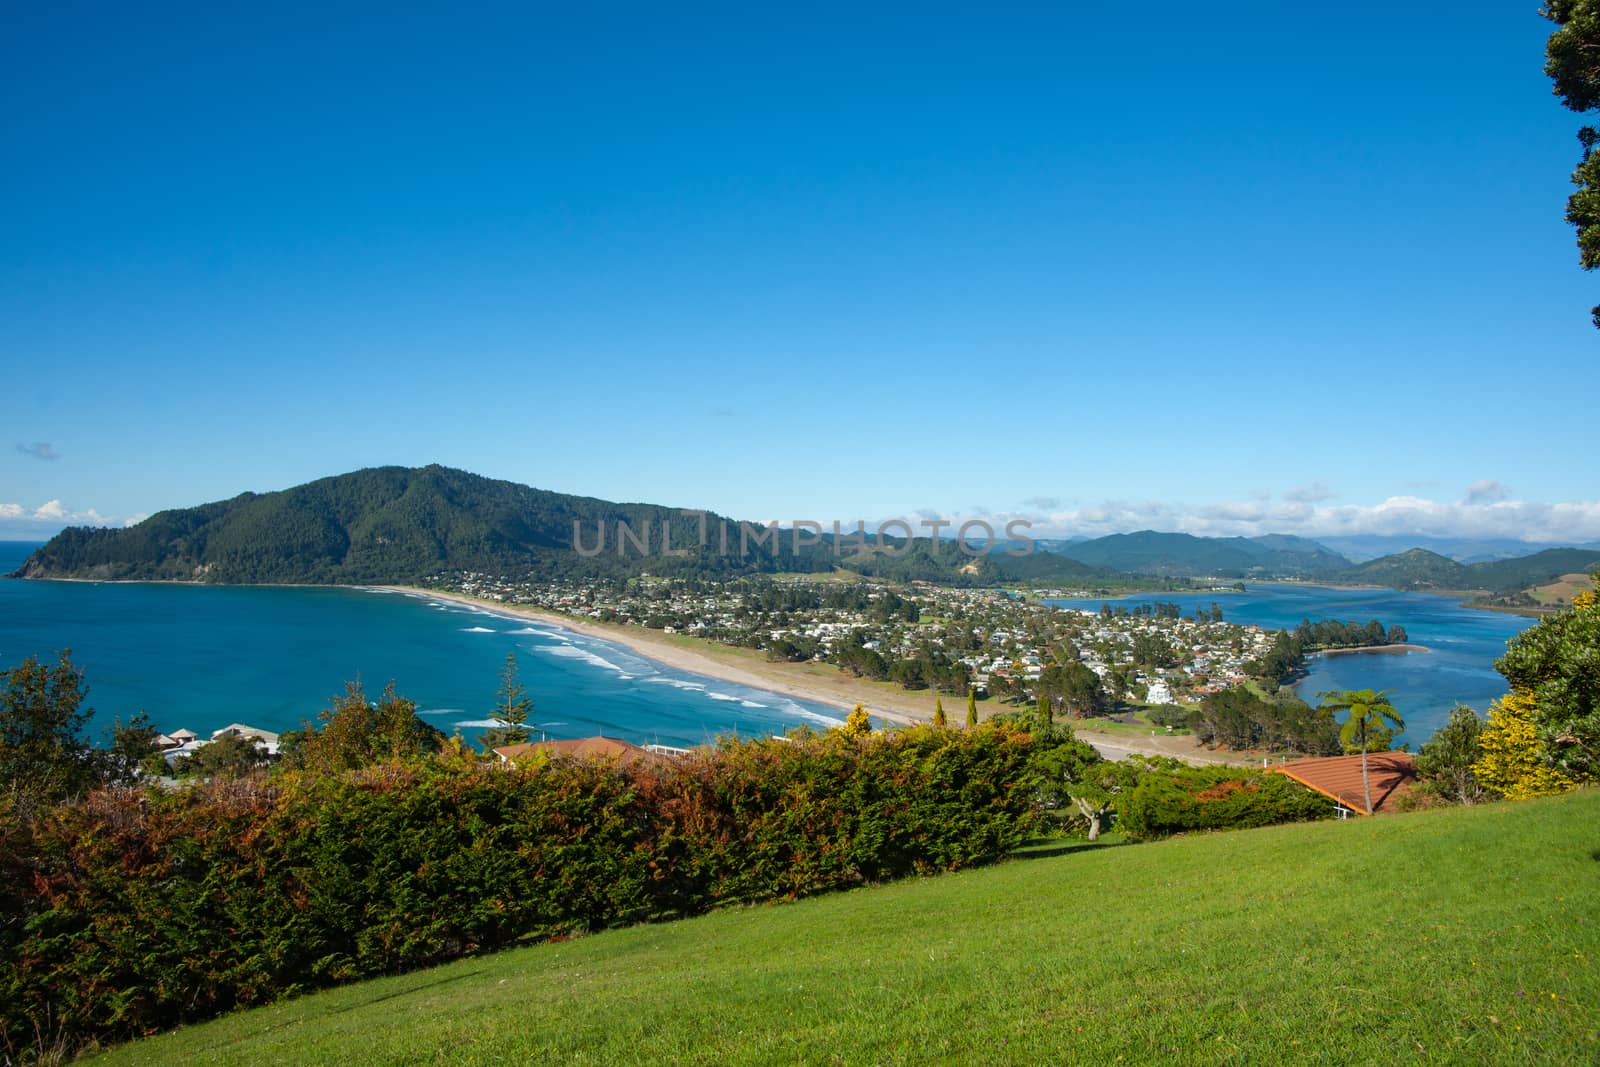 Tairua township and beach on Coromandel Peninsula, New Zealand.